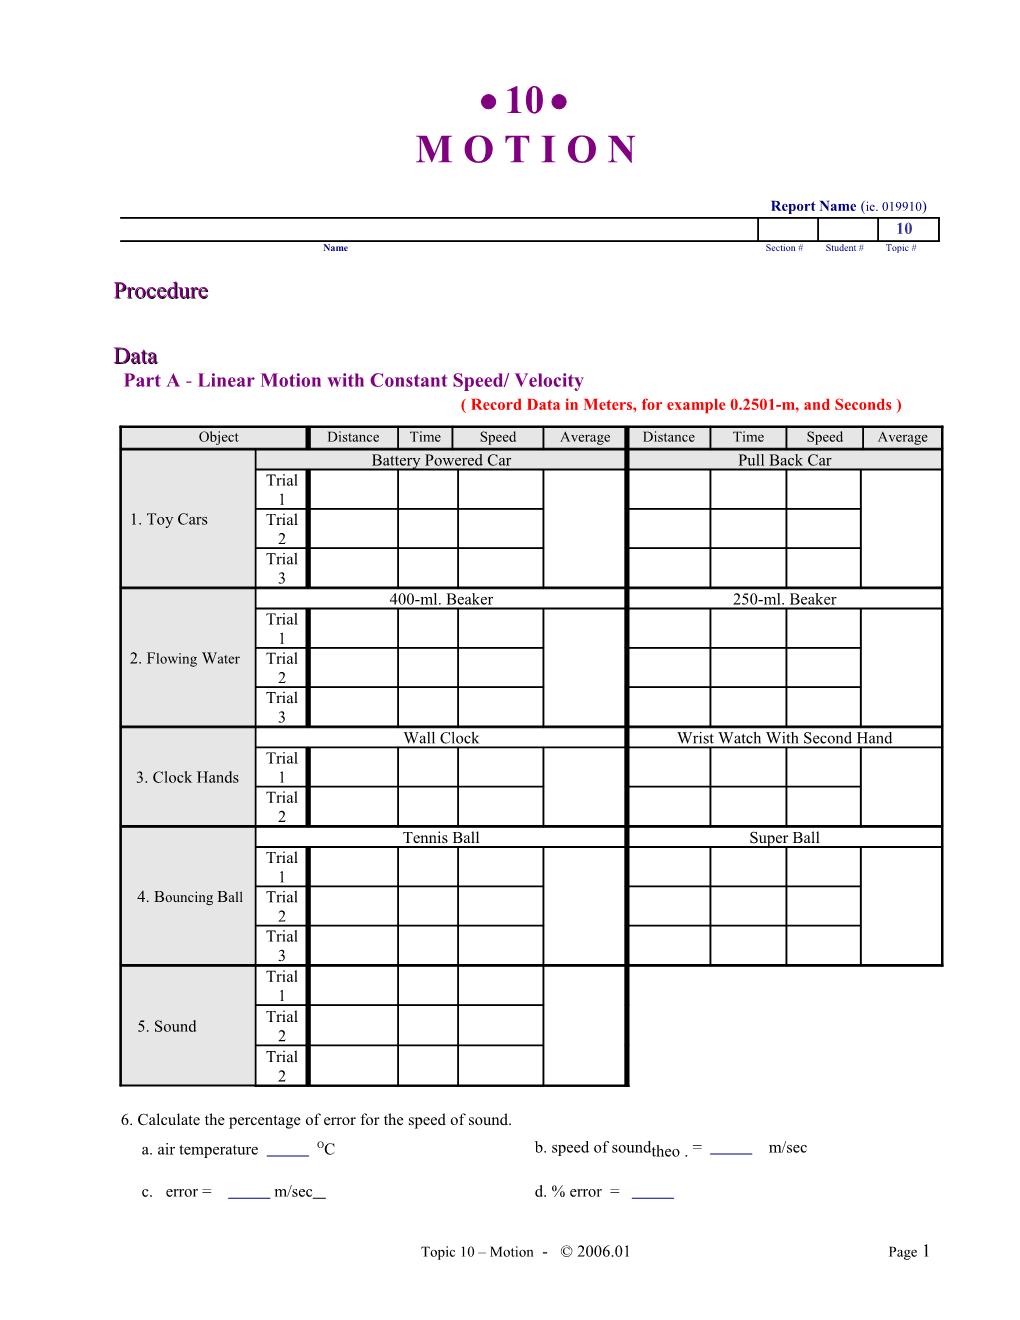 Motion Data Sheet